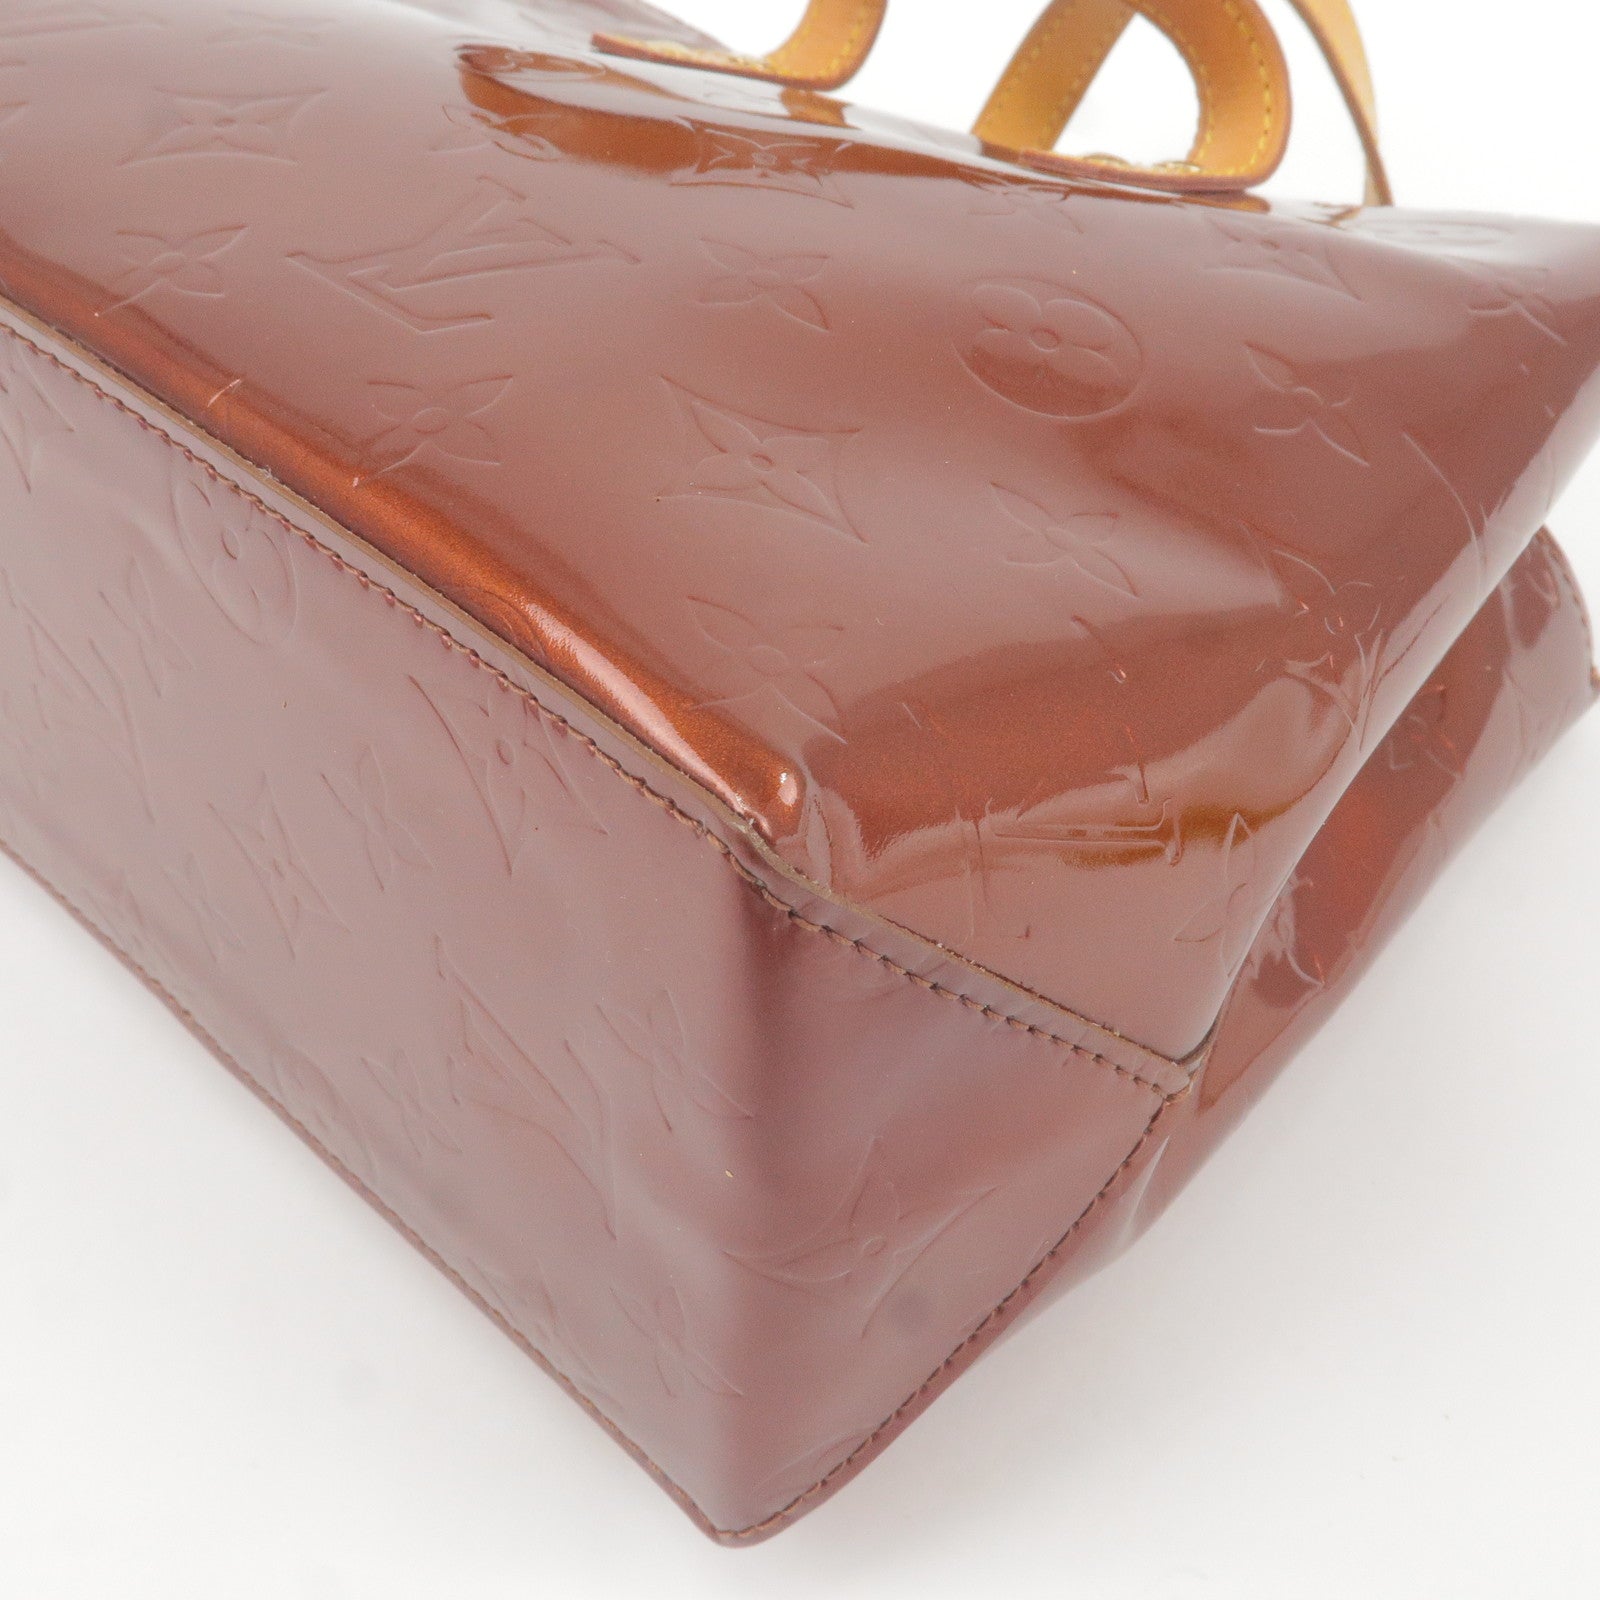 Louis Vuitton Vintage Monogram Raspail Flap Bag - Brown Shoulder